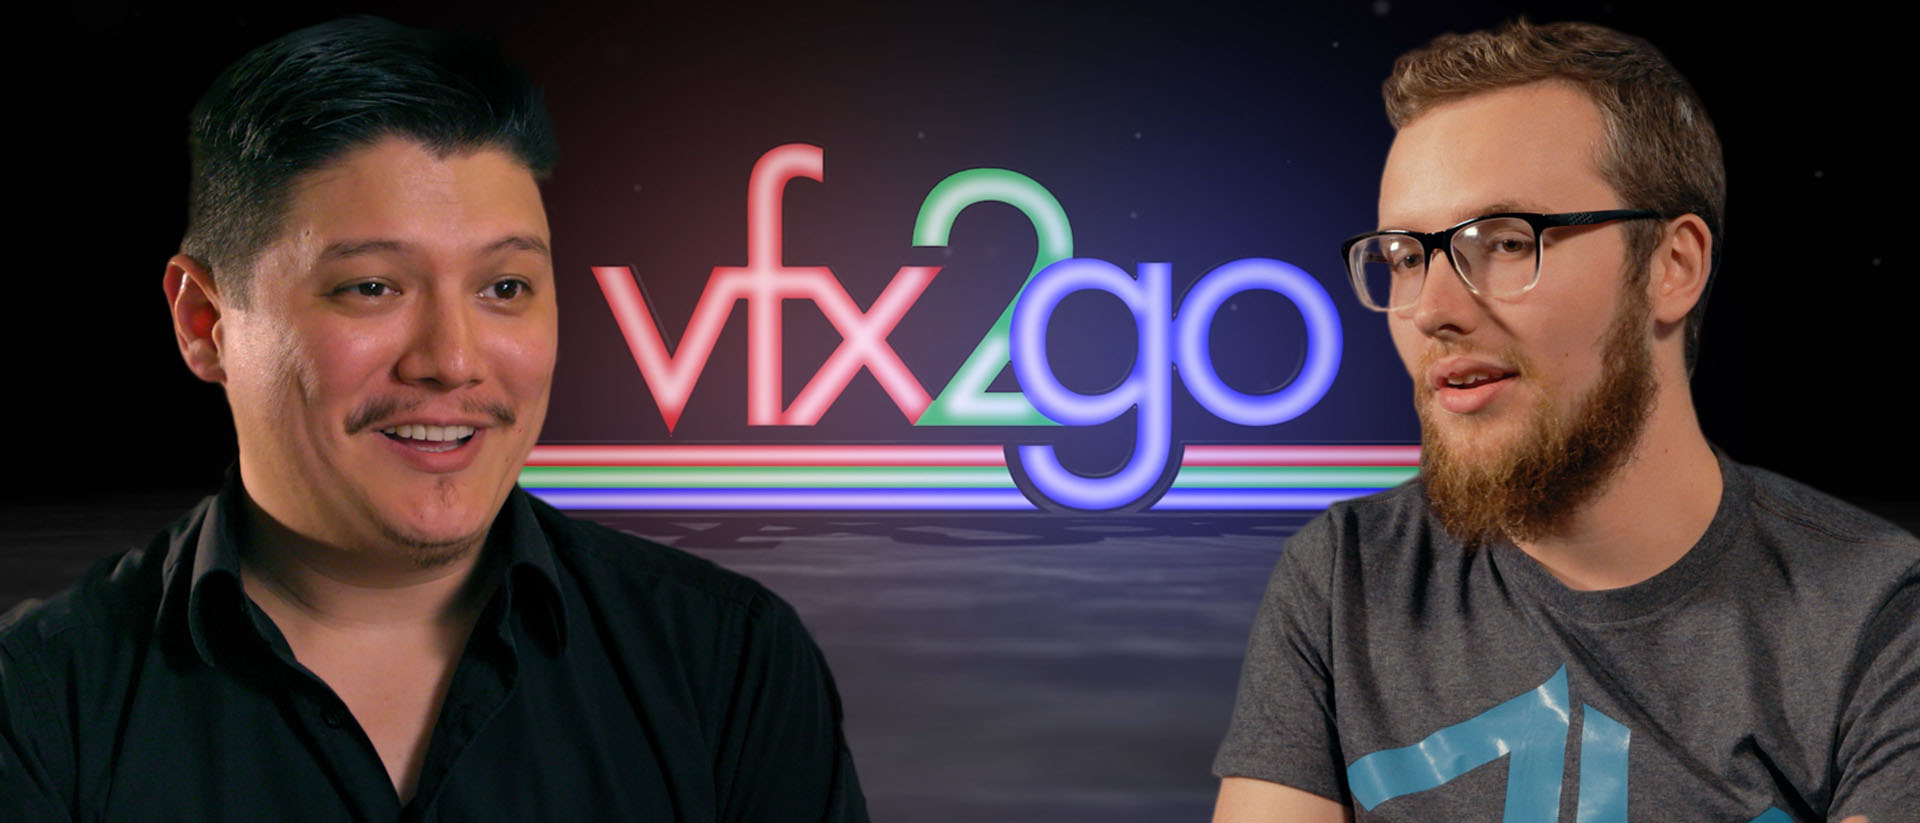 VFX Spotlight: Interview with Jake Akuna, Founder/VFX Supervisor of VFX2GO